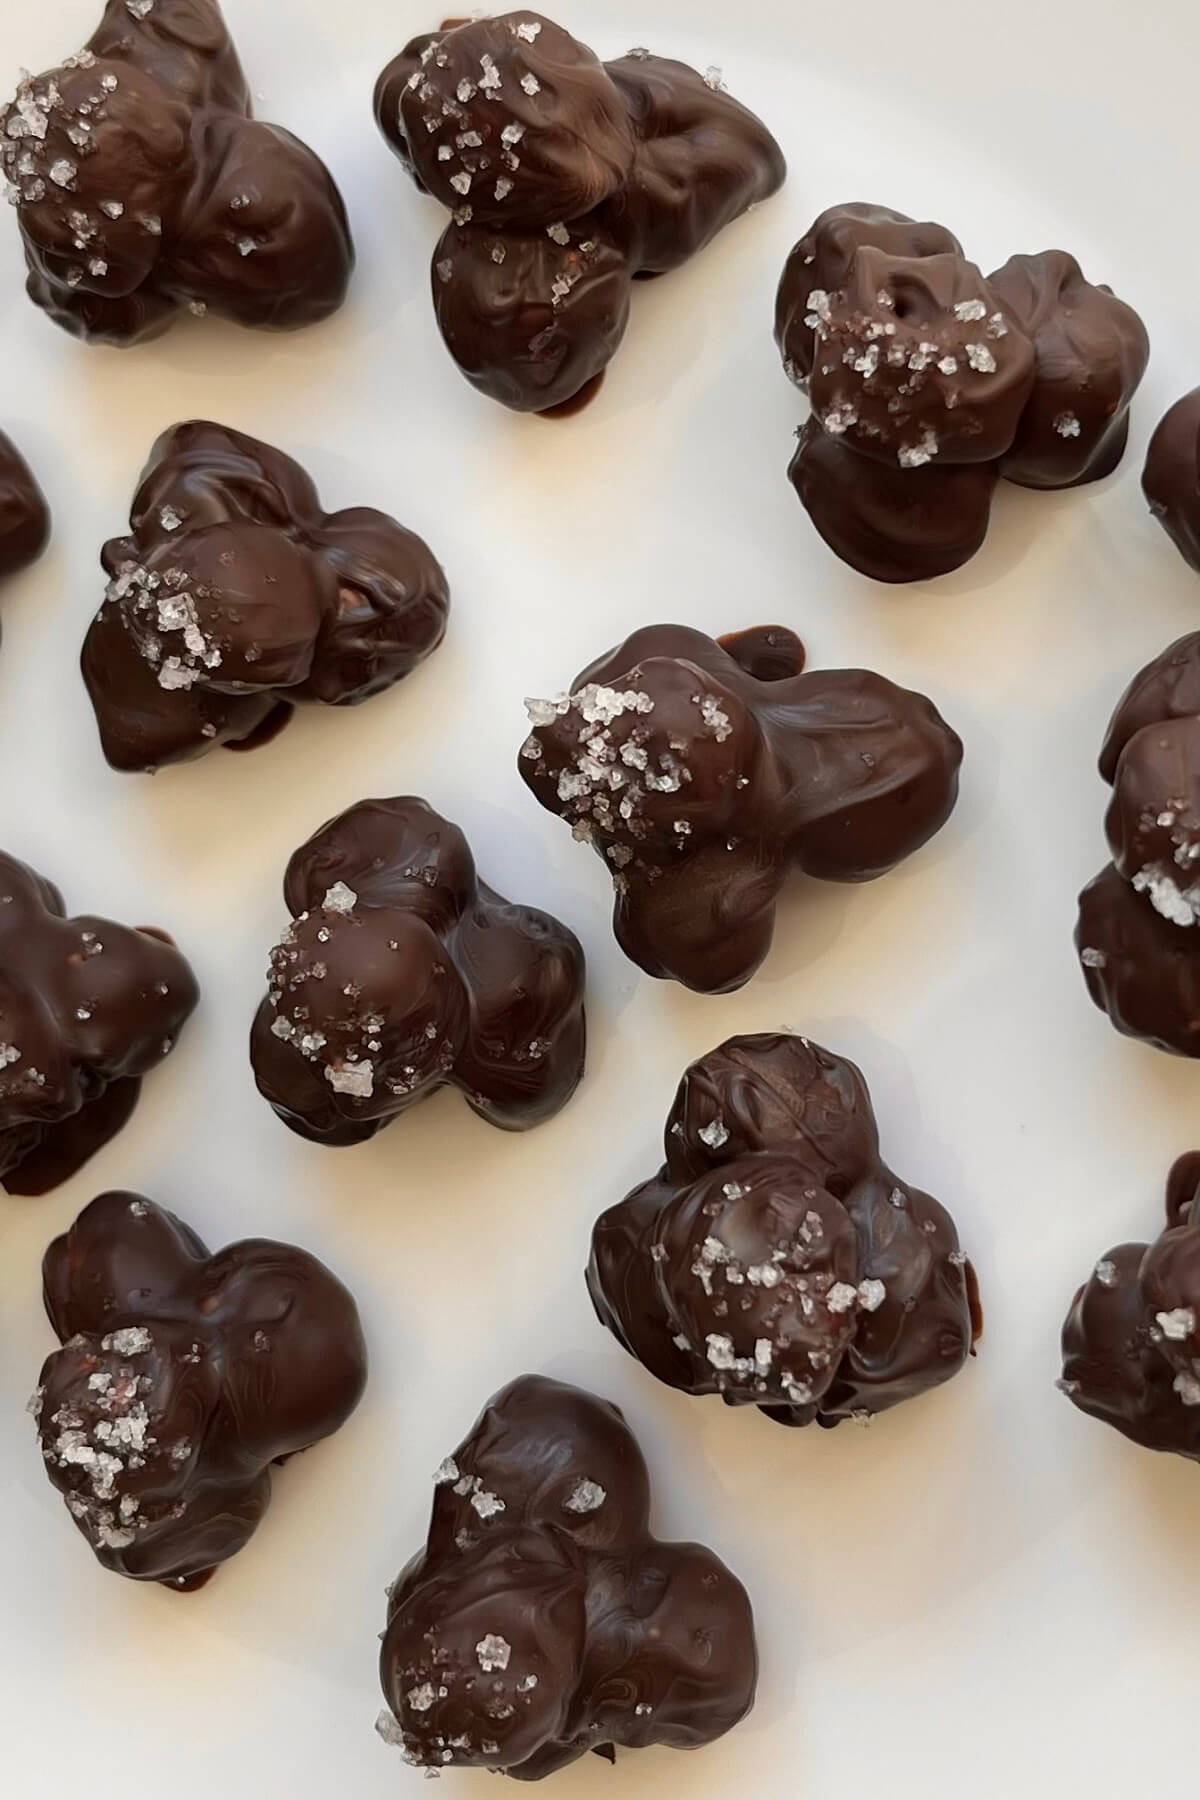 Chocolate hazelnut clusters on a white plate.